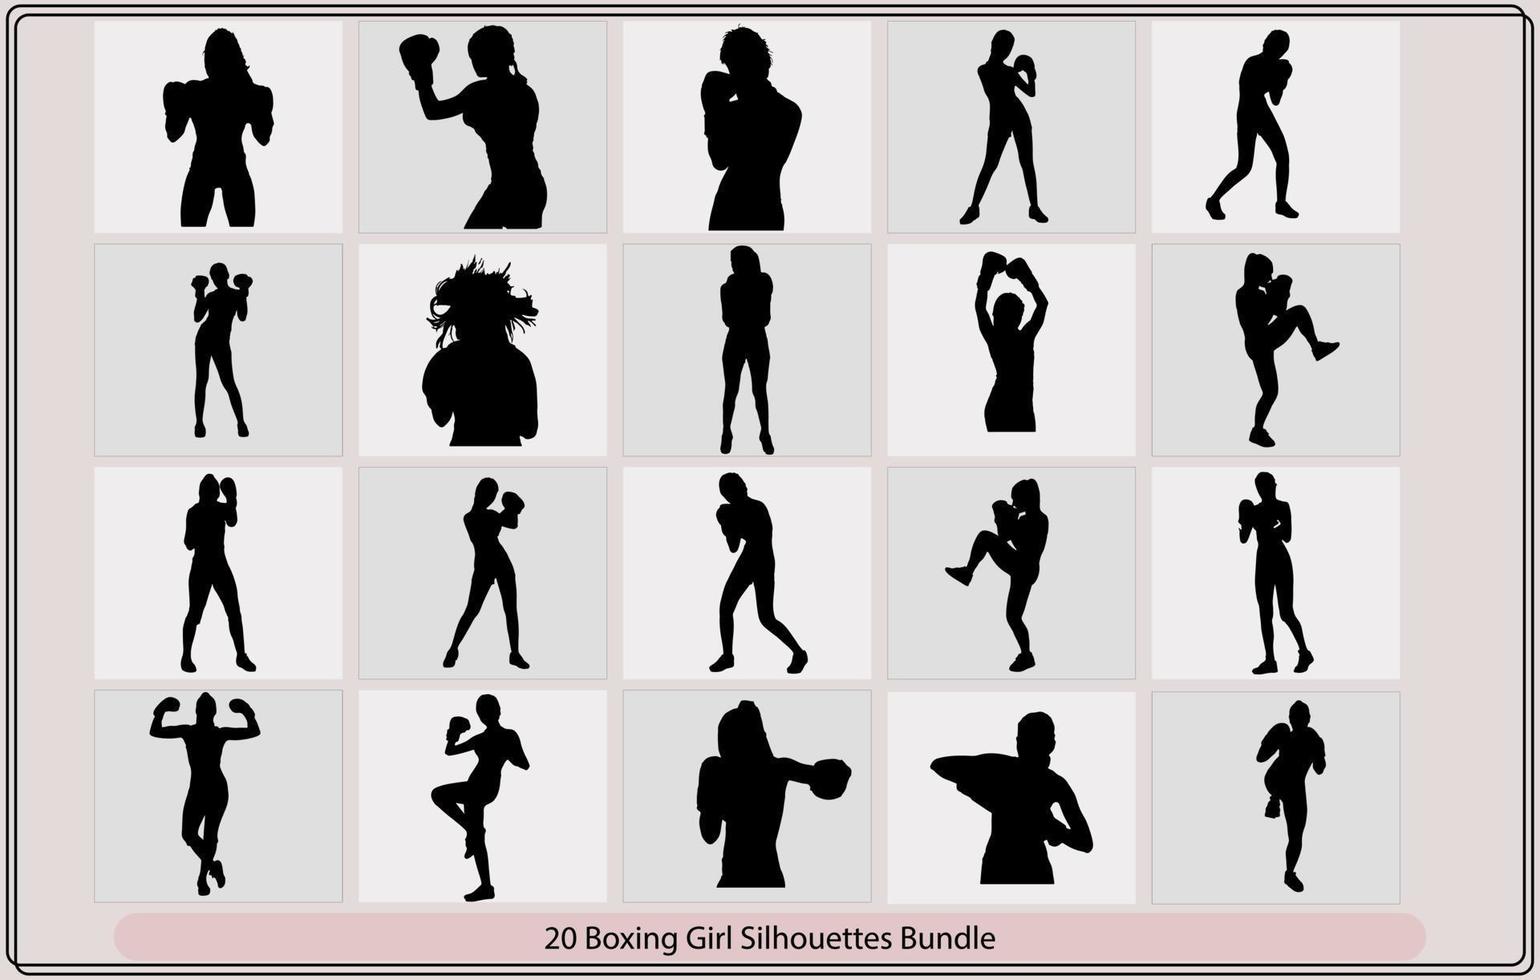 boxer woman silhouette,Template Girl Woman Boxing silhouette,boxer woman silhouette in black vector